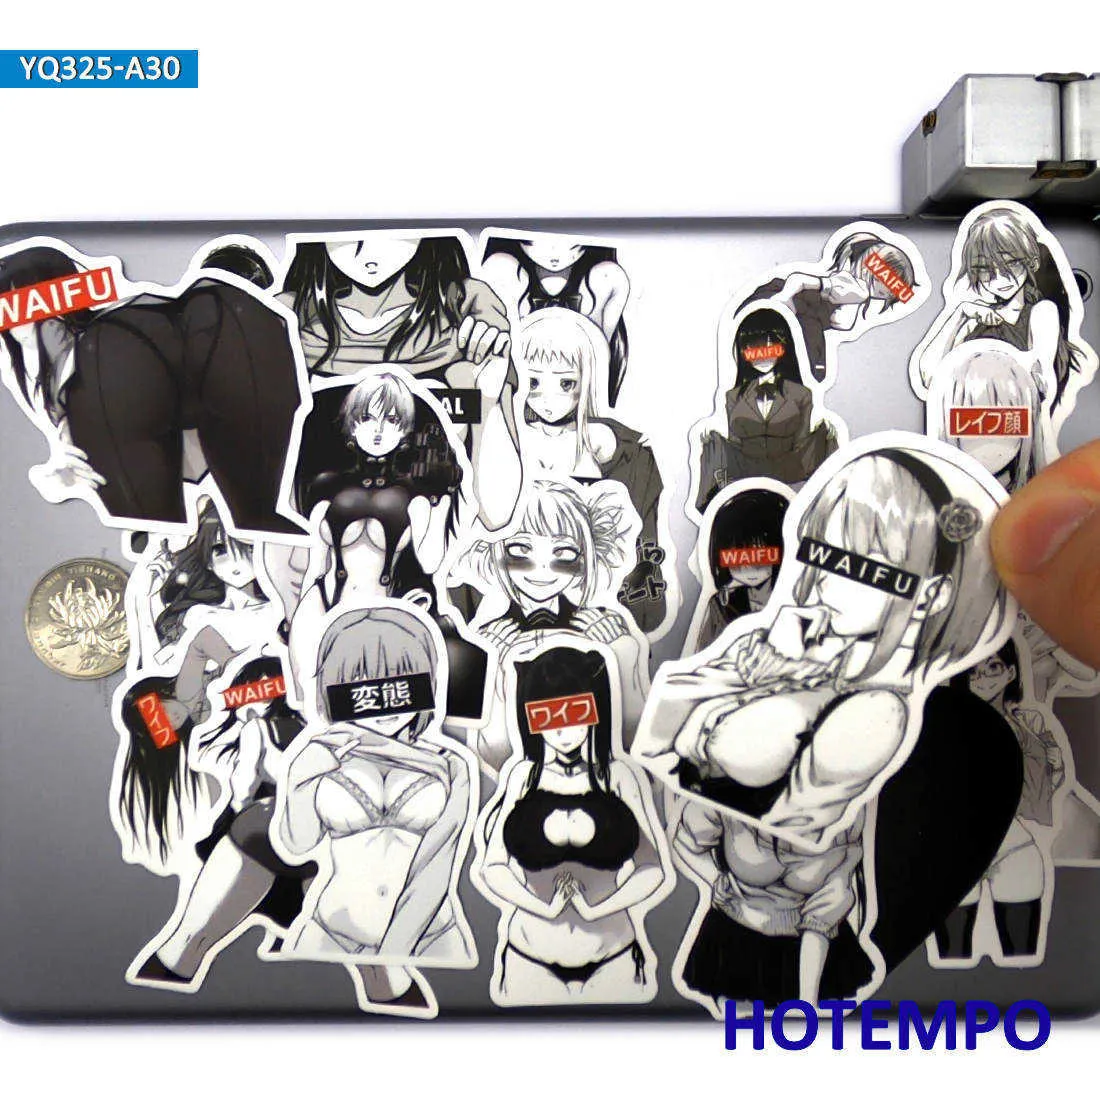 30 stuks sexy anime meisjes zwart wit manga otaku waifu telefoon laptop auto stickers voor notebooks skateboard motorfiets fiets sticker ca2155